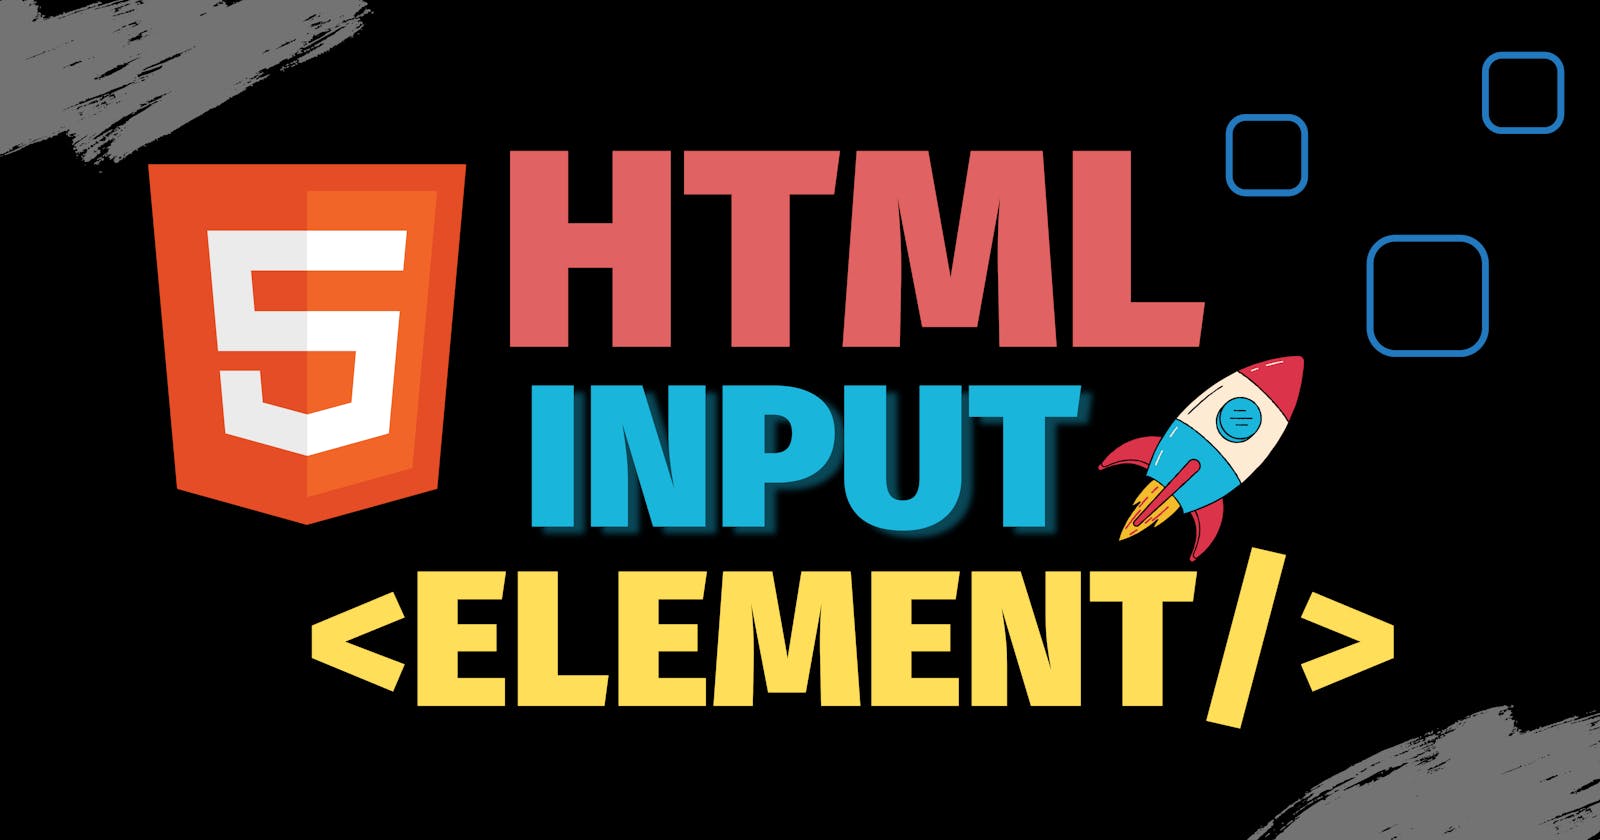 HTML input elements